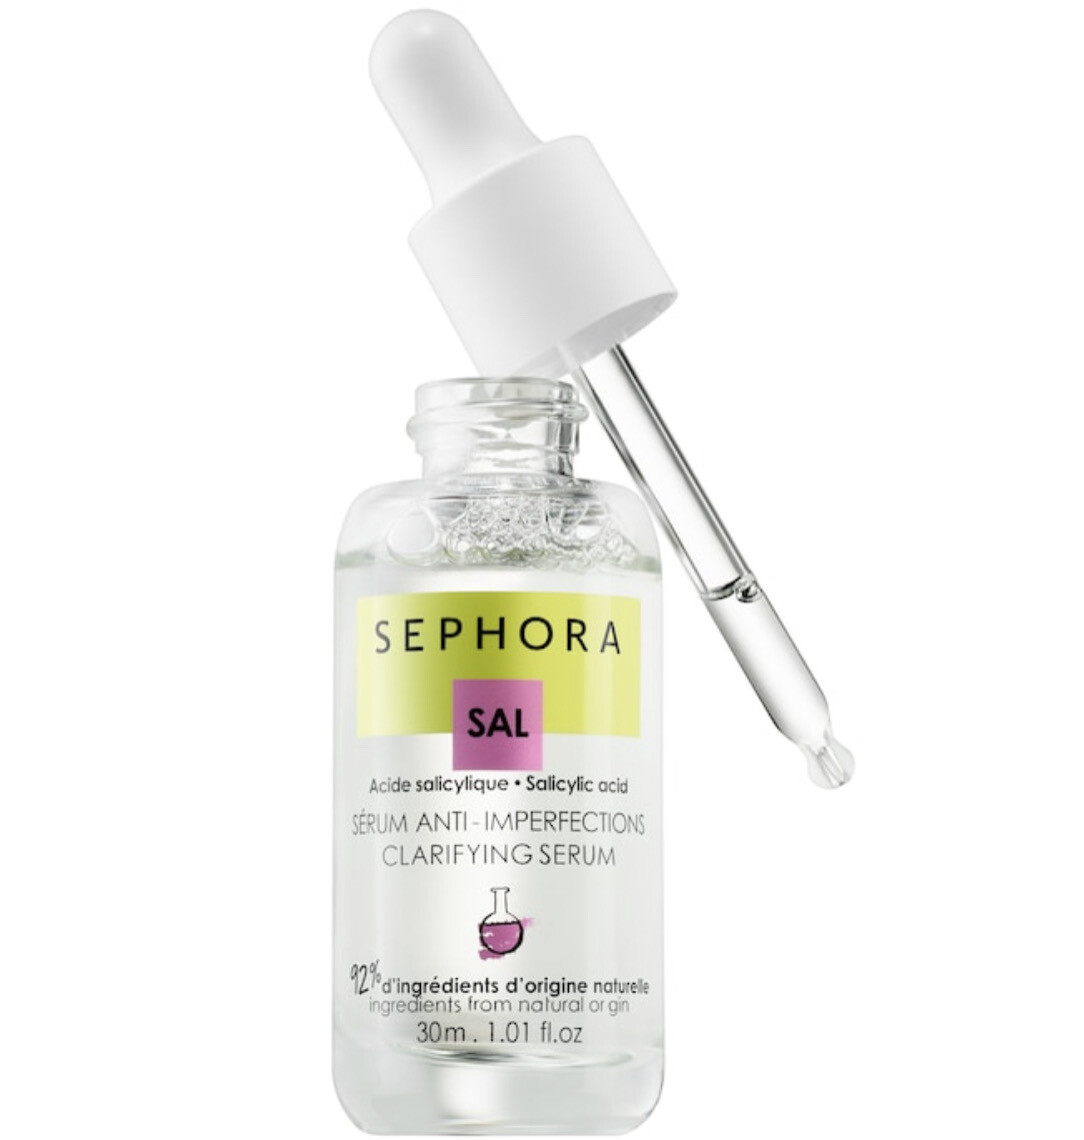 Sephora - Clarifying Serum SAL